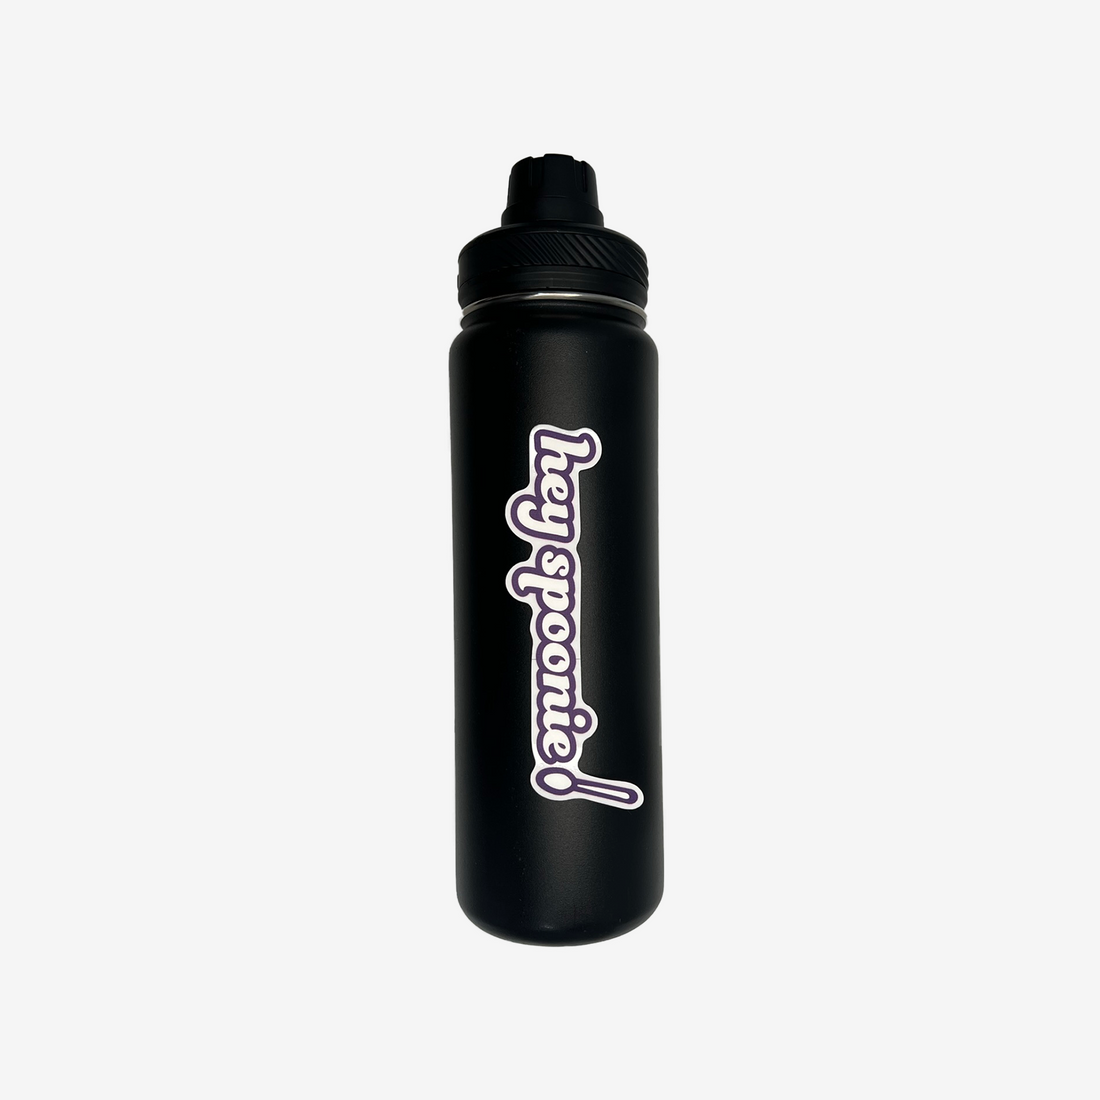 Purple and white Hey Spoonie sticker on black water bottle